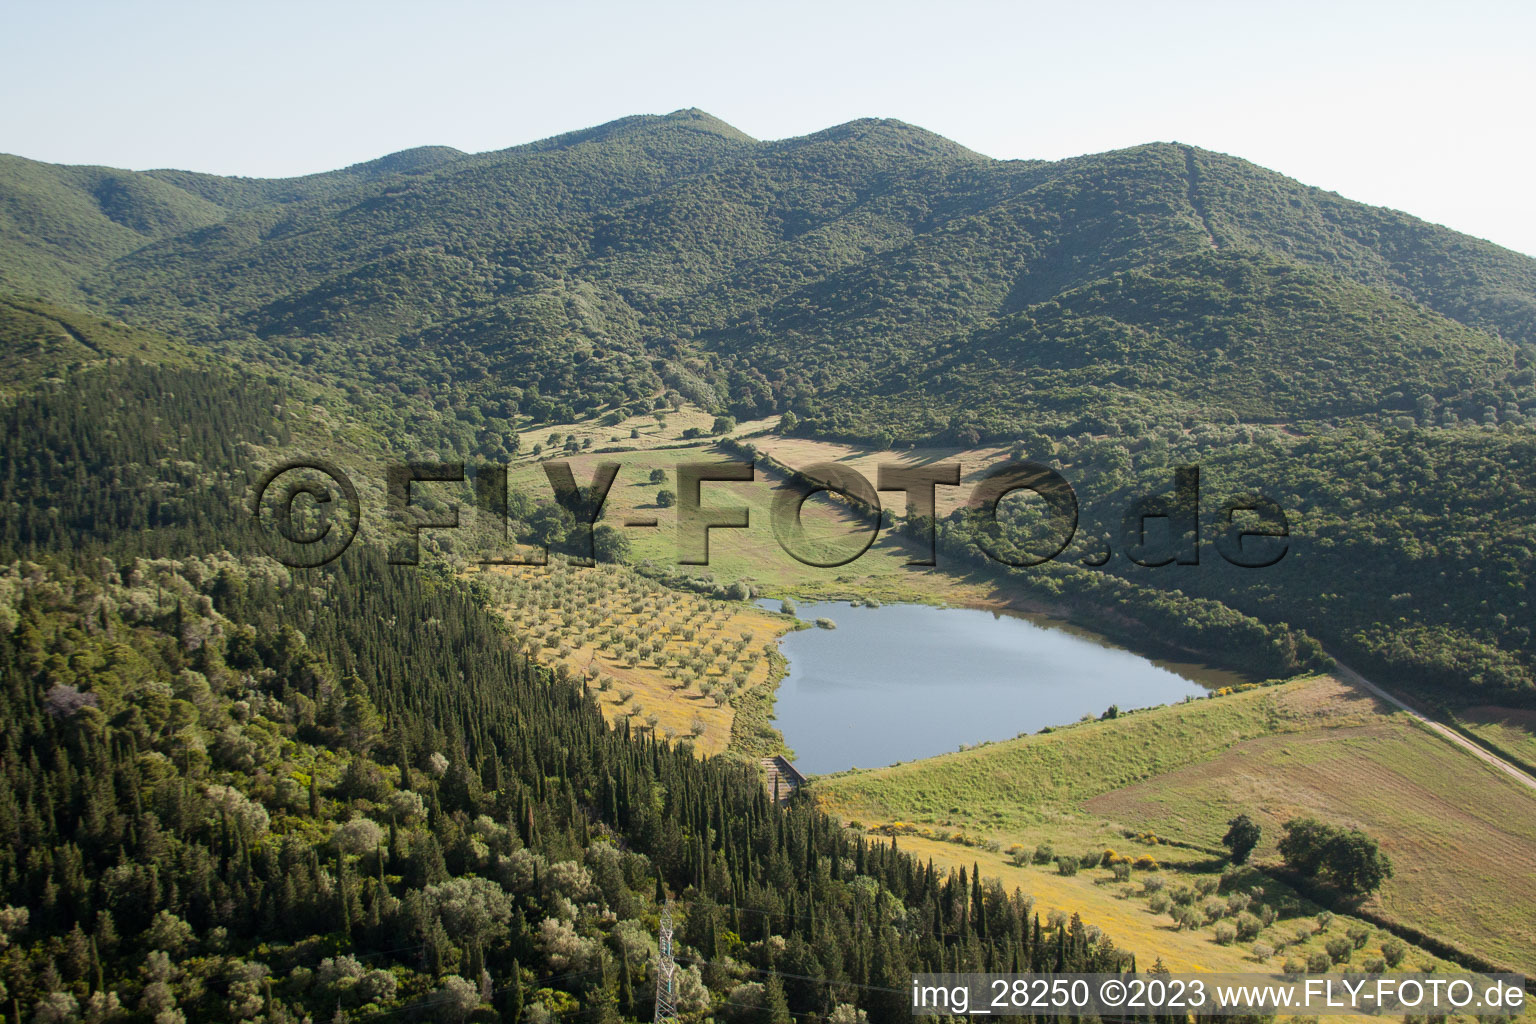 Luftbild von Macchiascandona im Bundesland Toscana, Italien